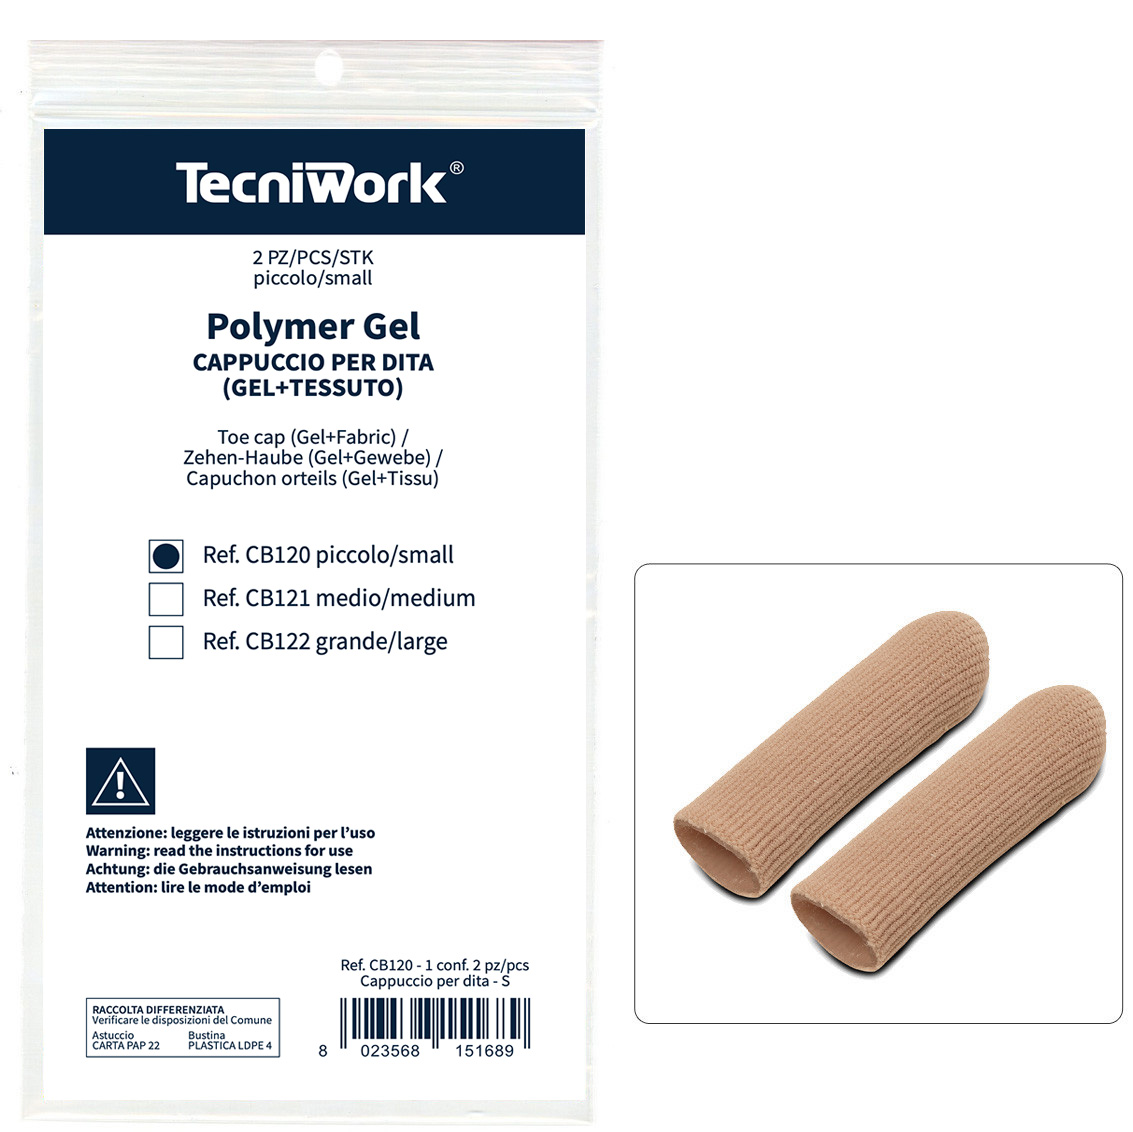 Tecniwork Polymer Gel toe protection gel and fabric